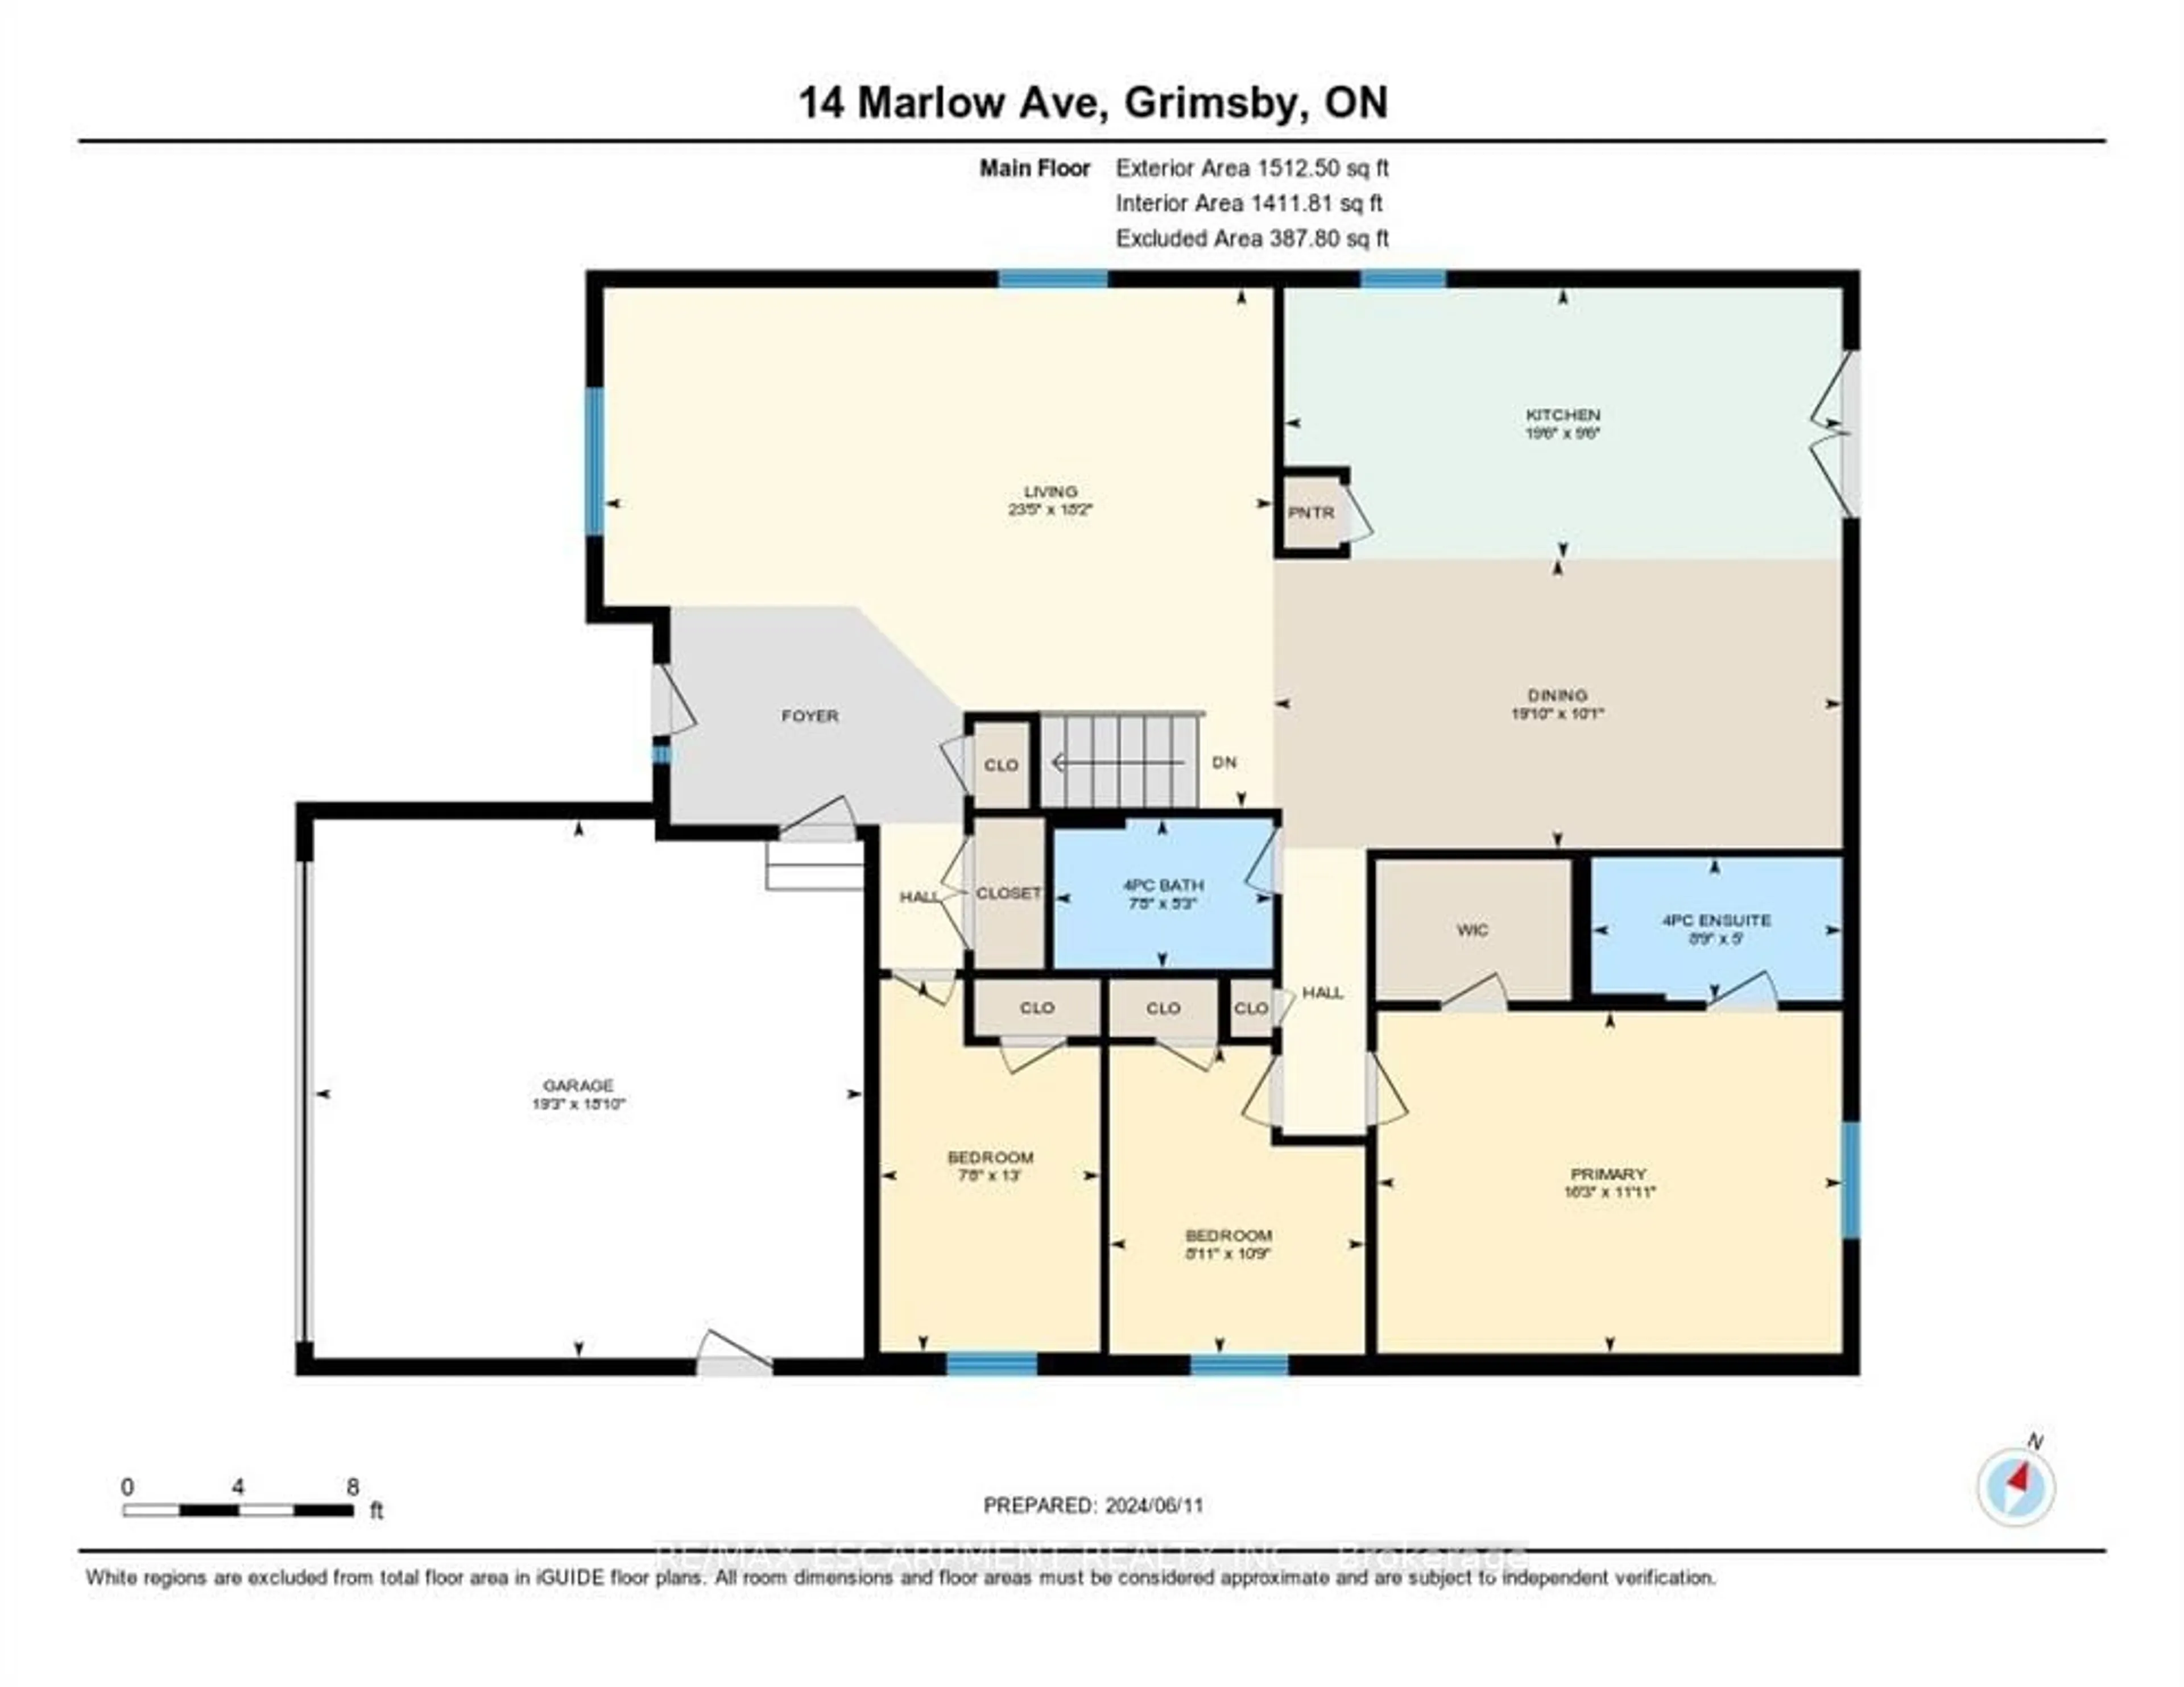 Floor plan for 14 Marlow Ave, Grimsby Ontario L3M 1Y3